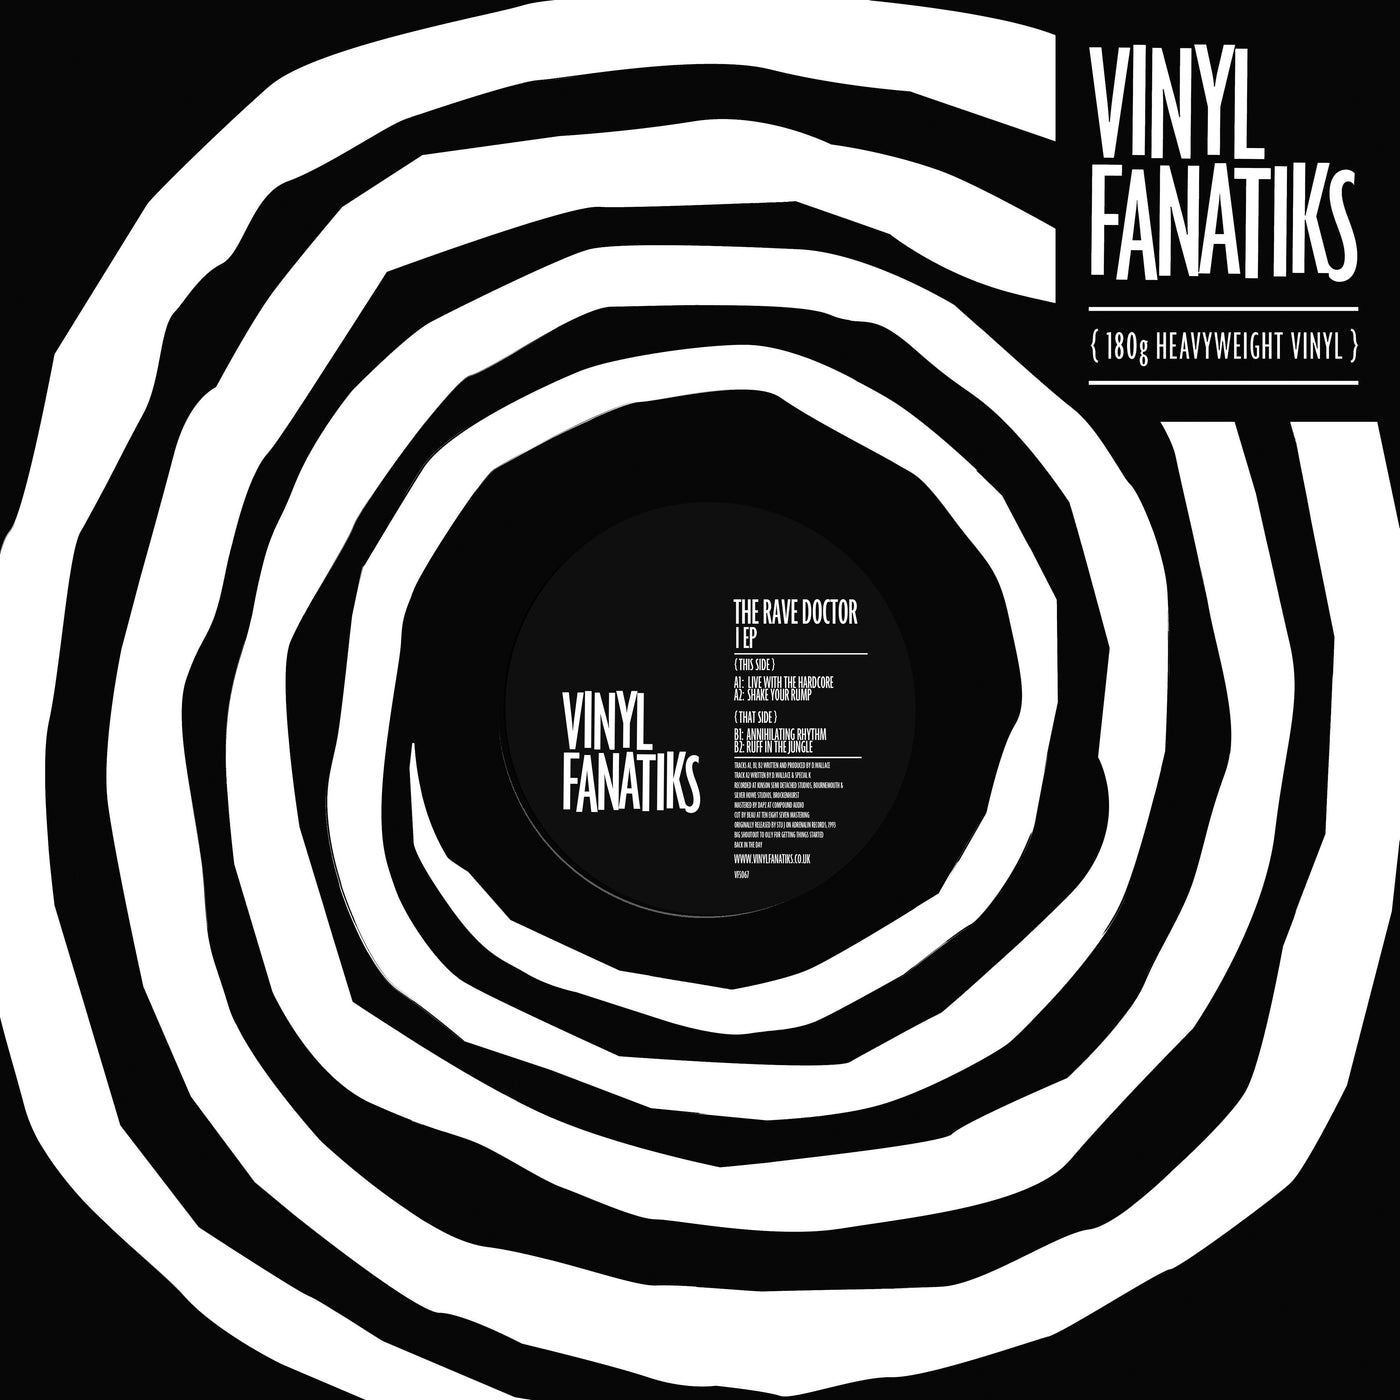 The Rave Doctor - I EP – VFS067 -  Marbled Vinyl